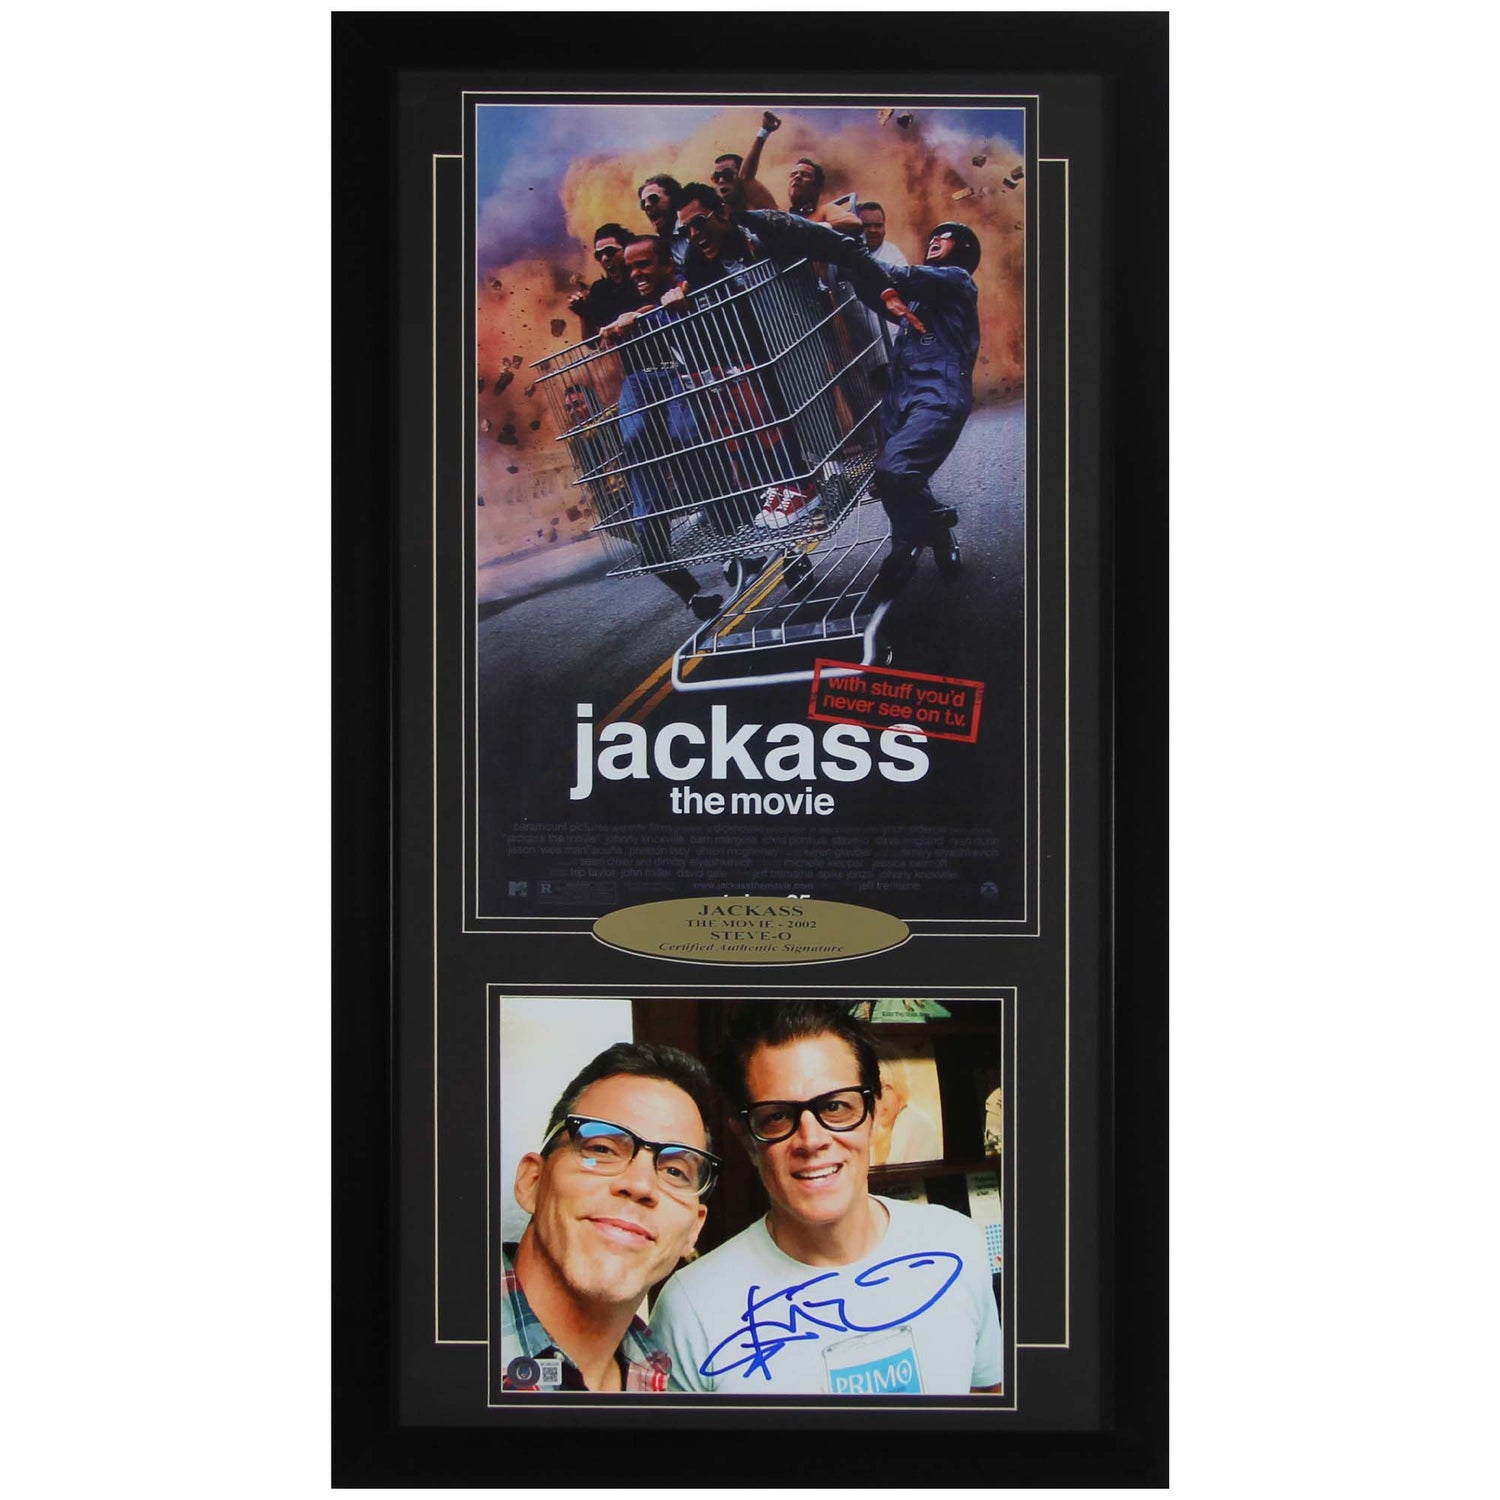 Steve-O Autographed Jackass Memorabilia – Gold & Silver Pawn Shop